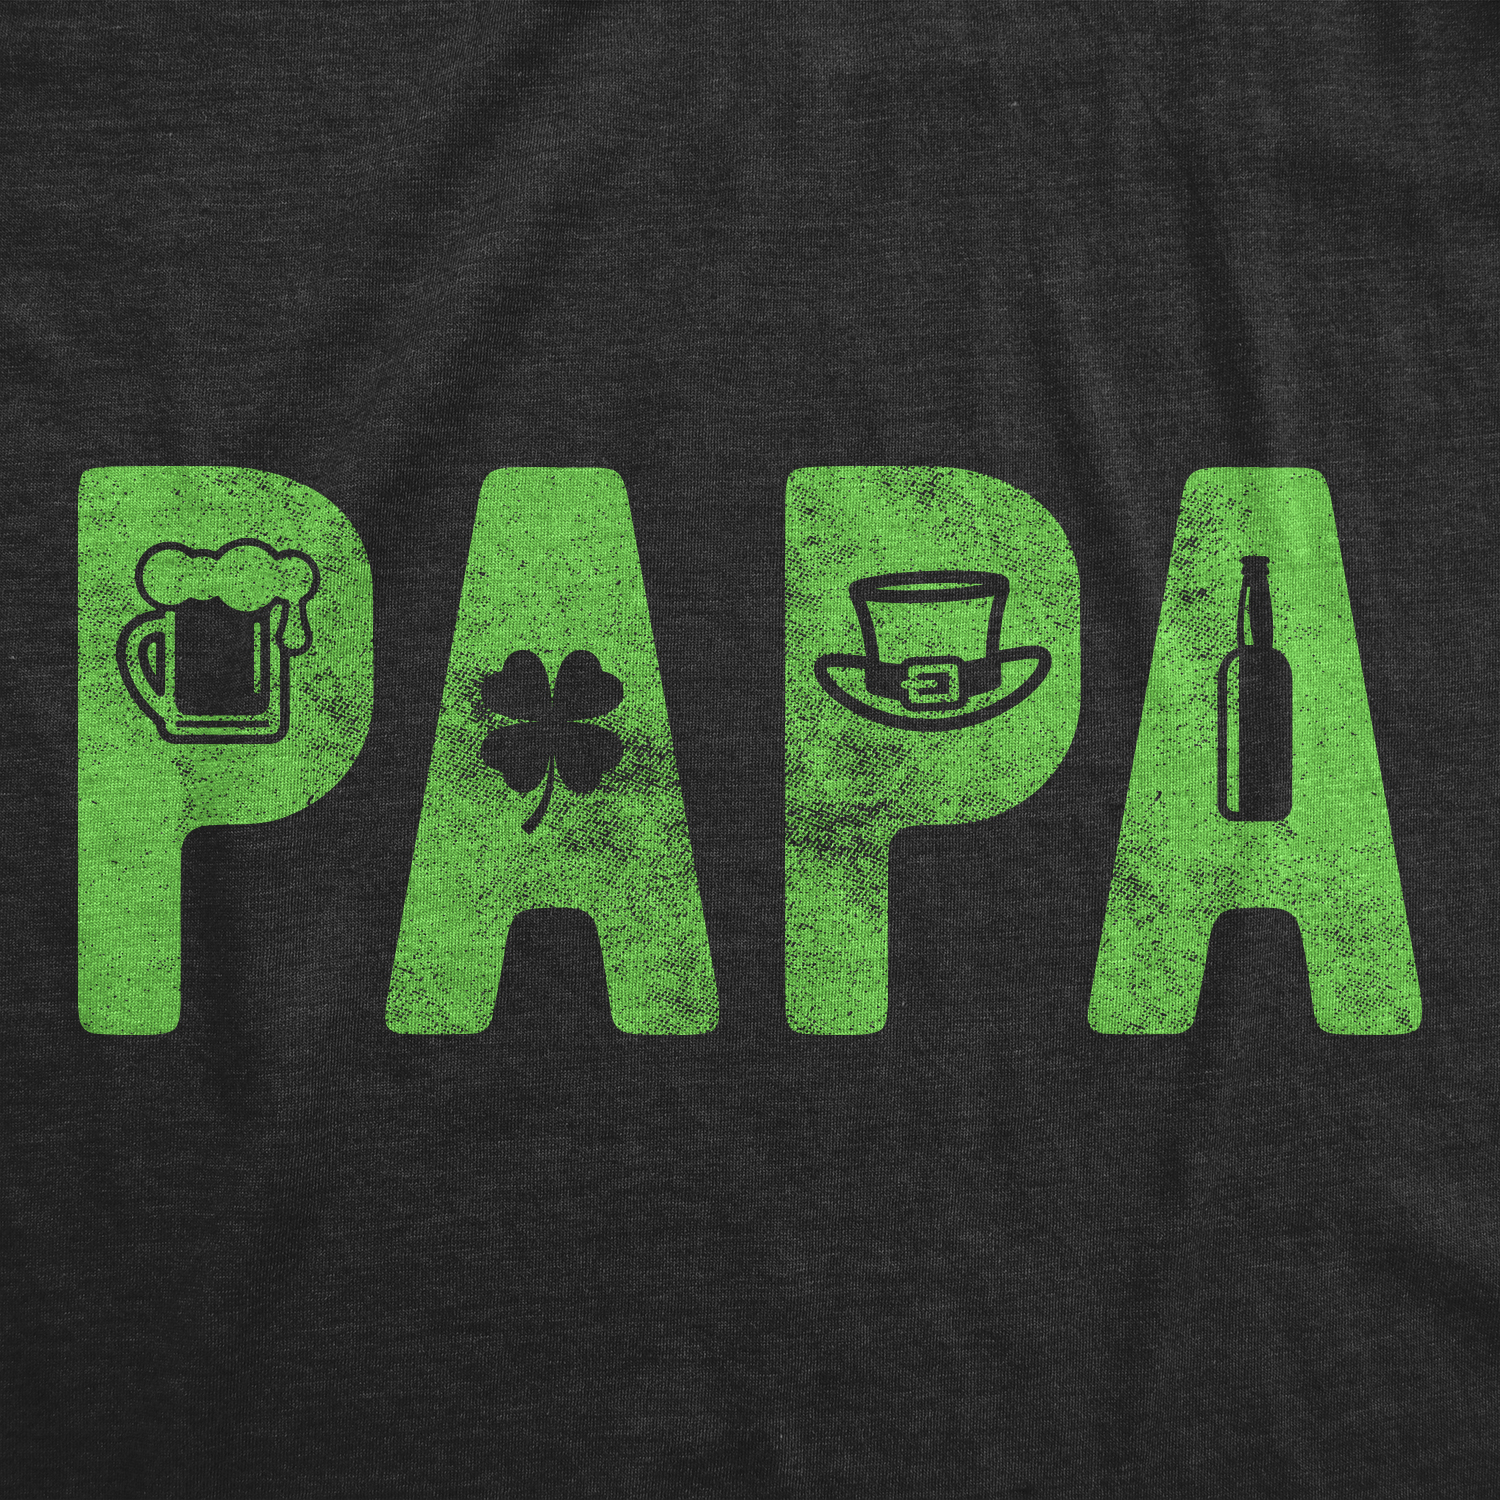 Crazy Dog Tshirts Mens Papa St. Patrick's Day Tshirt Funny Paddy's Day Parade Graphic Novelty Tee